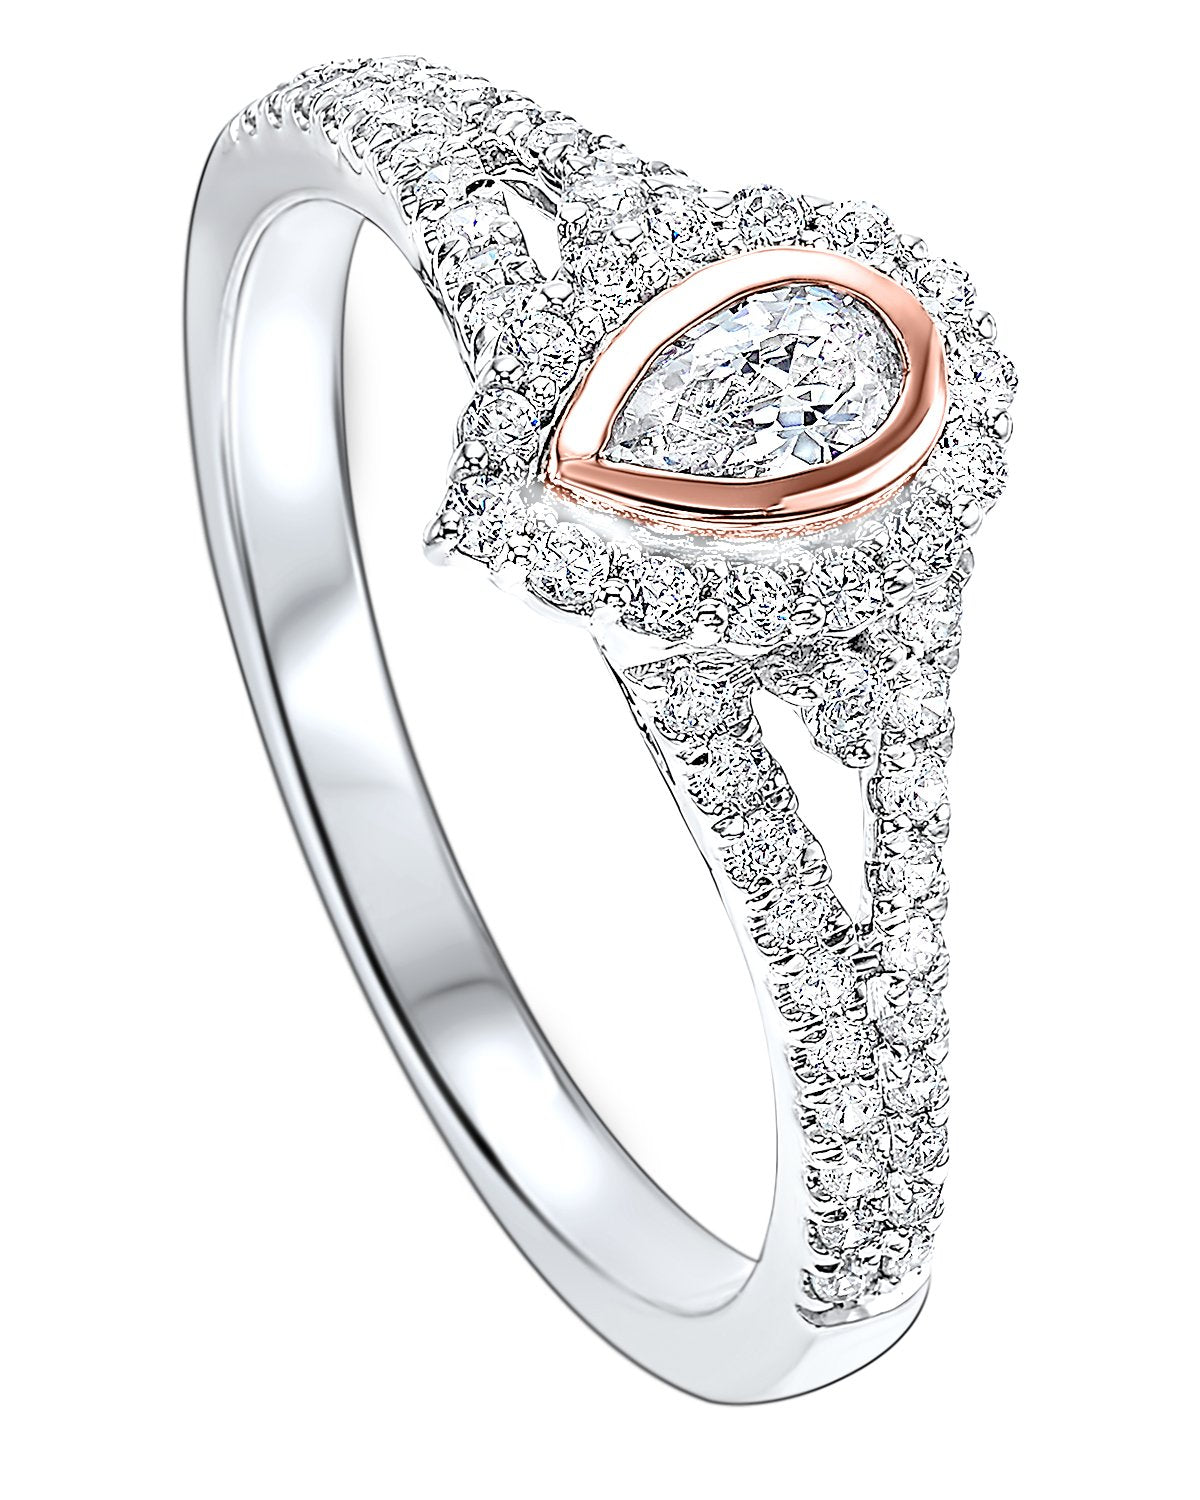 14K Diamond ring 1/2ctw, Fernbaugh's, RG10230-4WPC